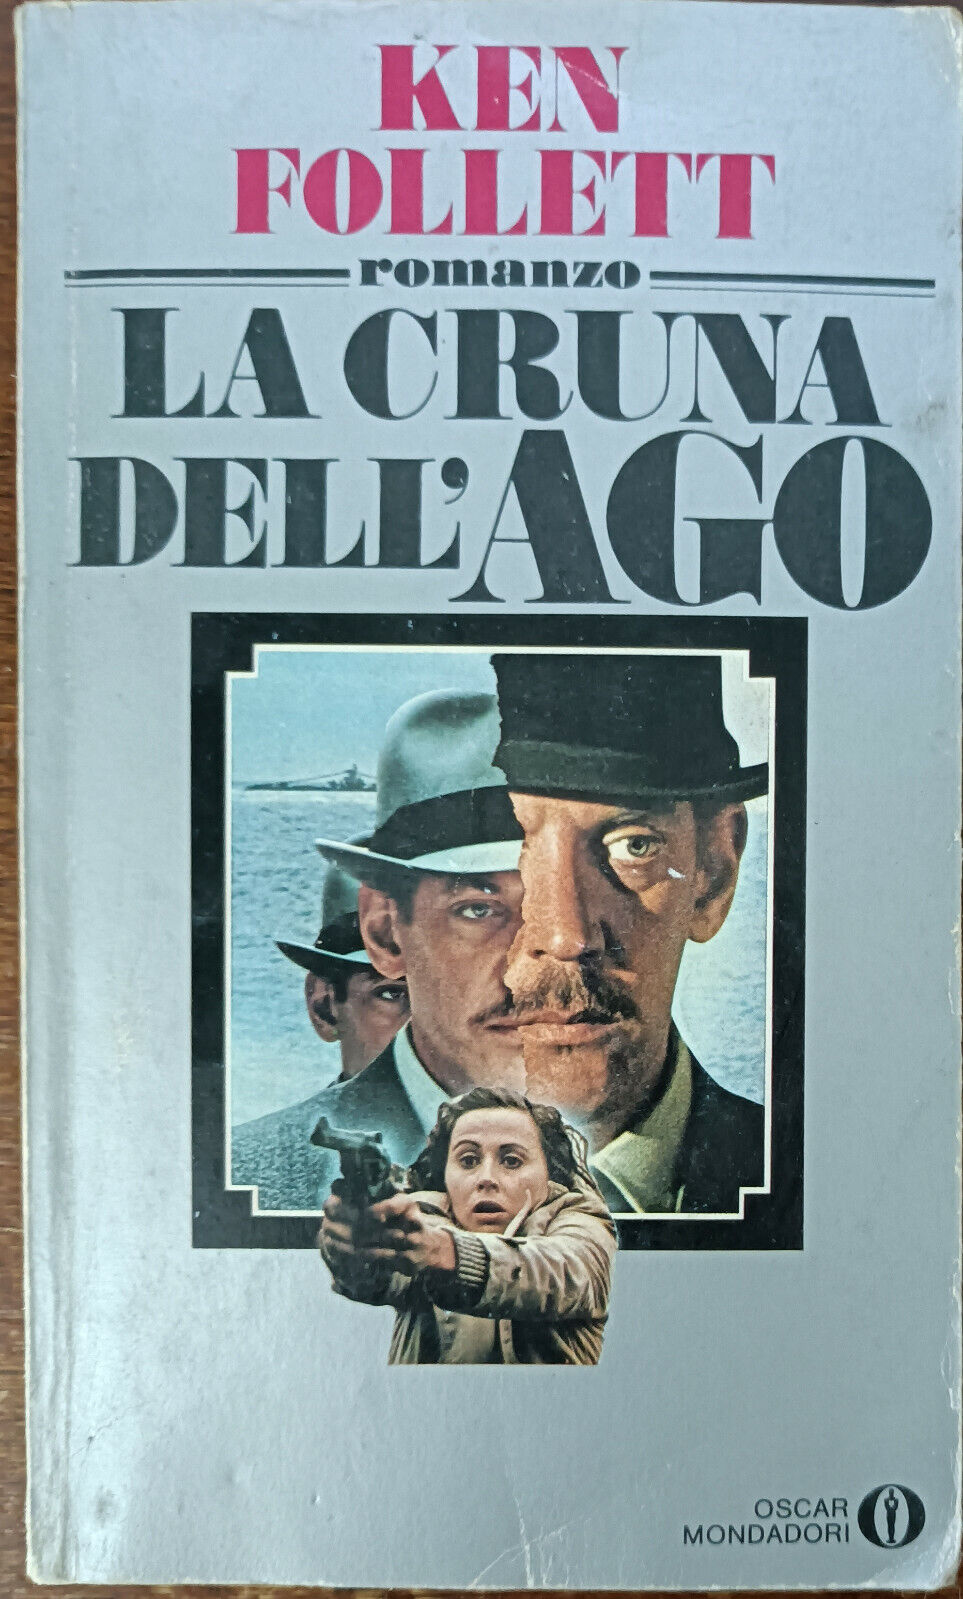 La cruna dell'ago - Ken Follett - Oscar Mondadori, 1979 - A